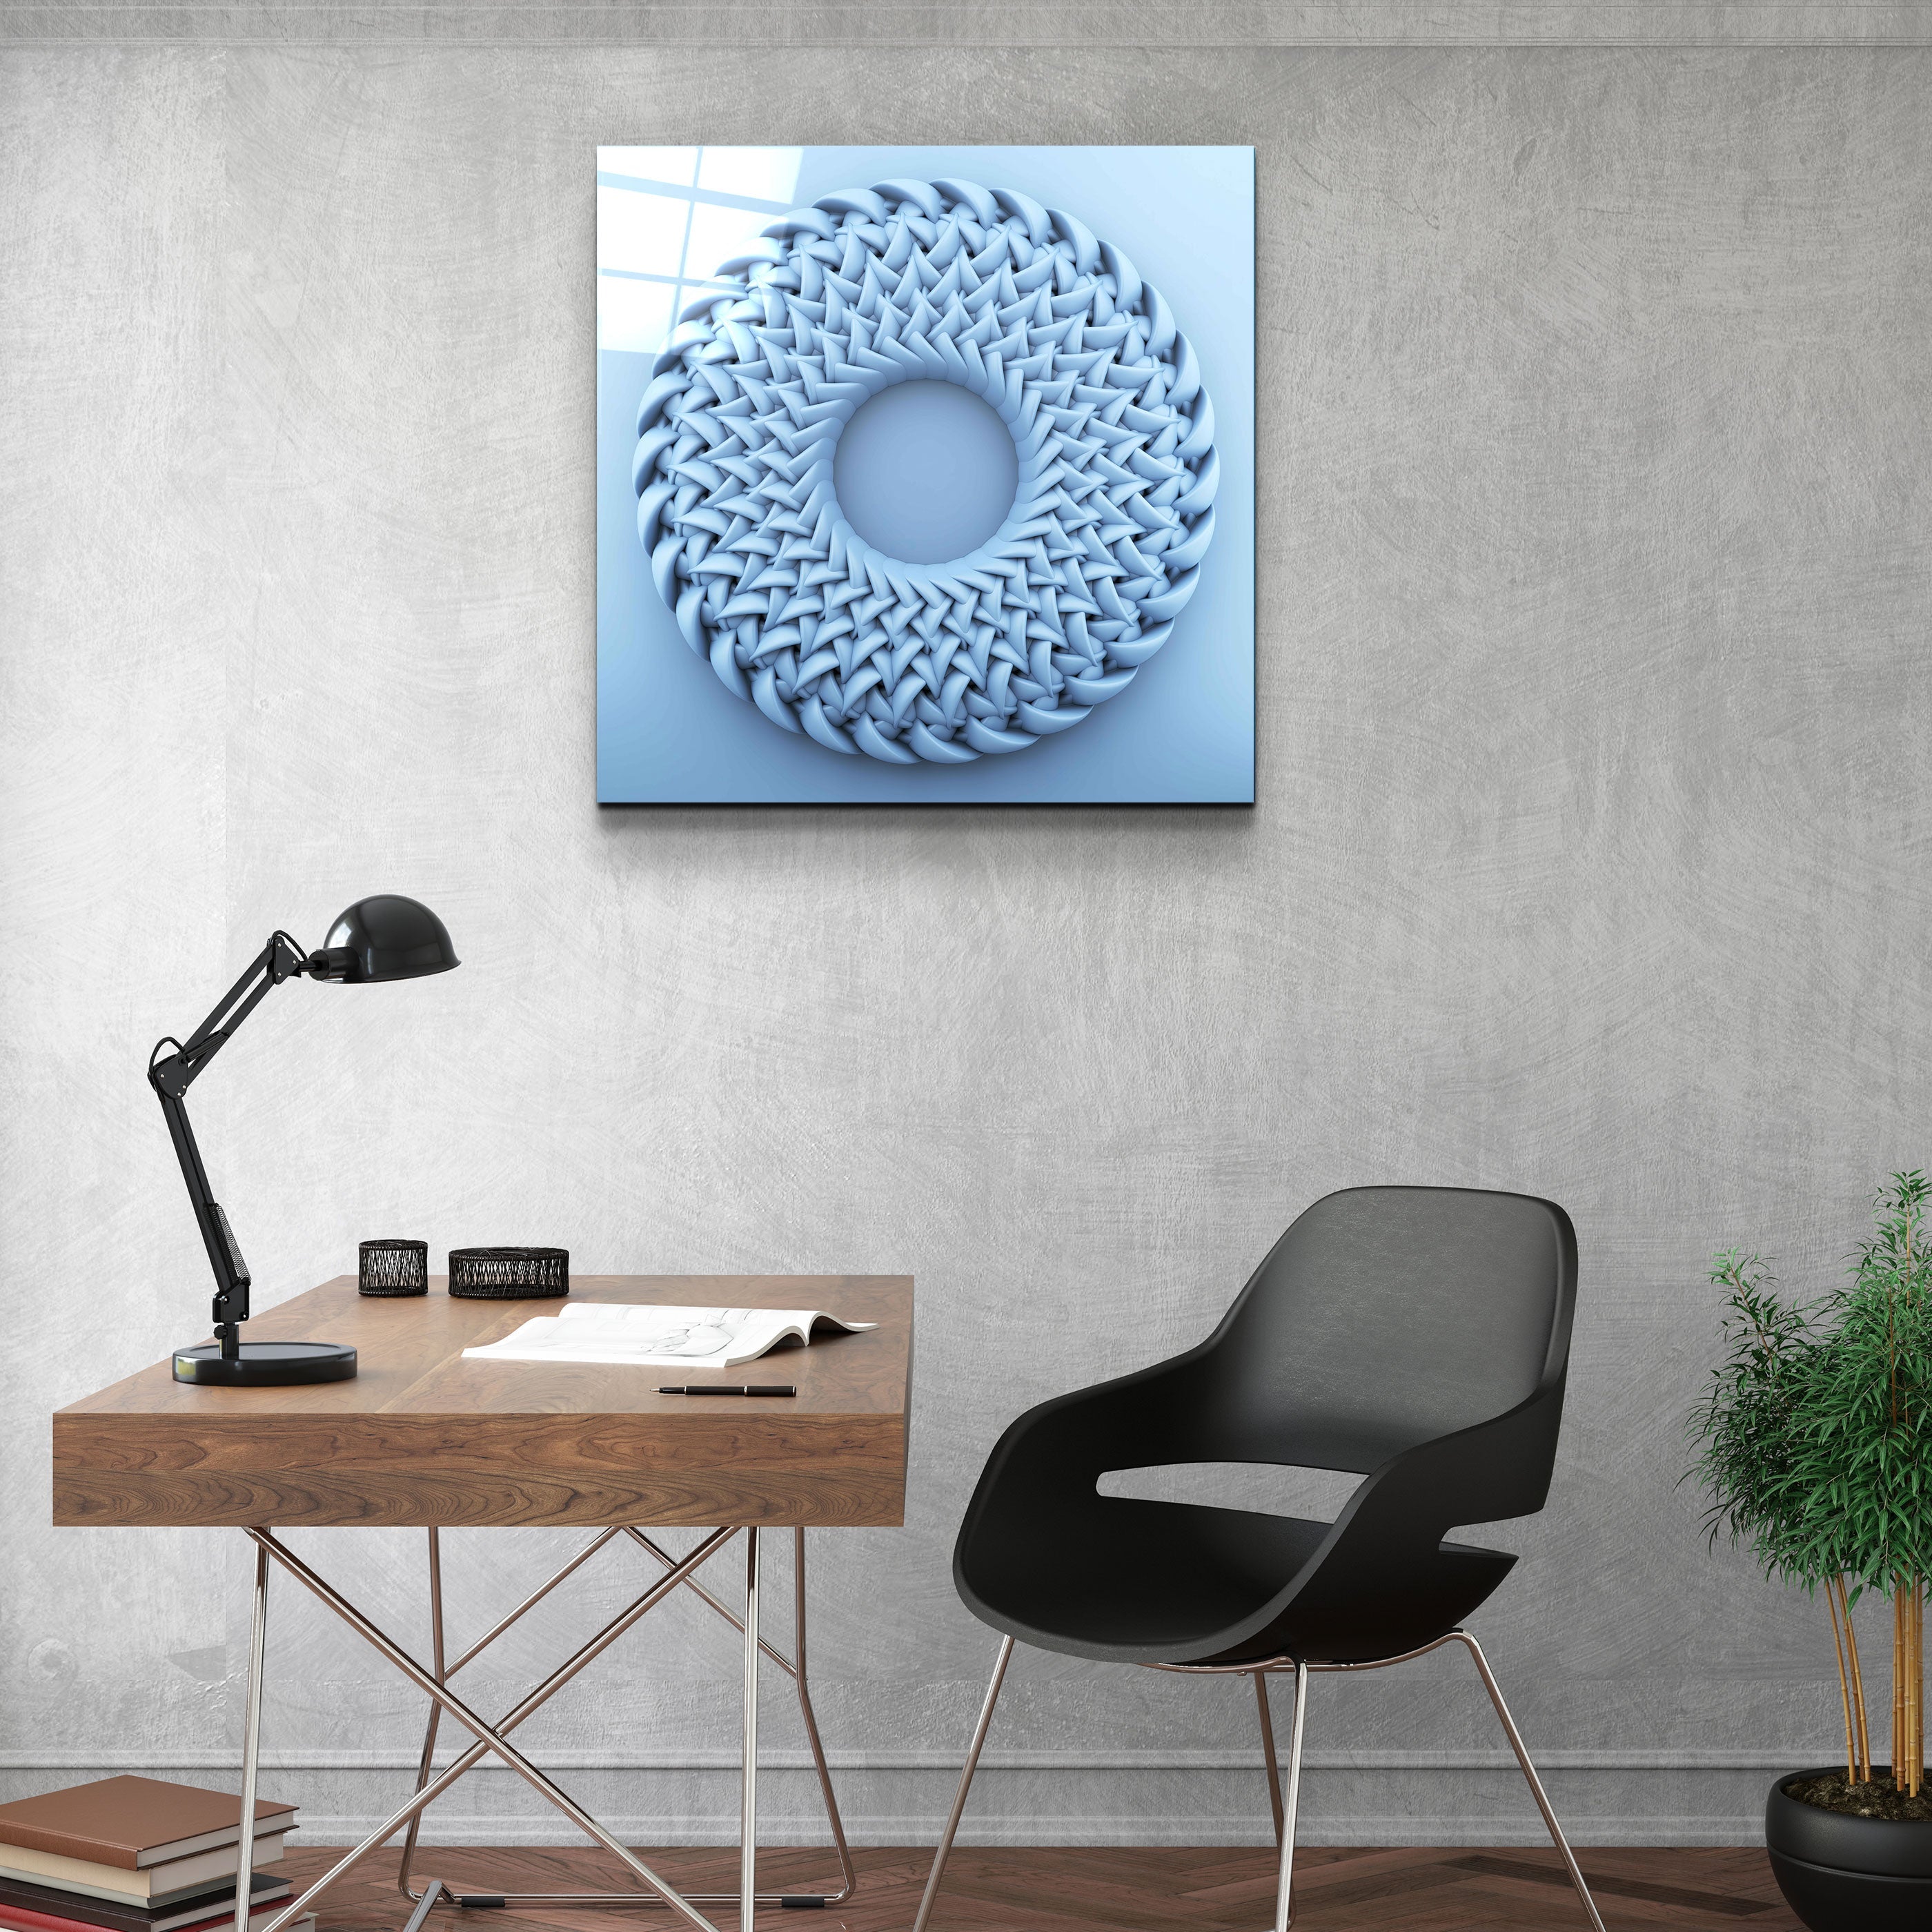 ."Abstract Circular Knitting". Designer's Collection Glass Wall Art